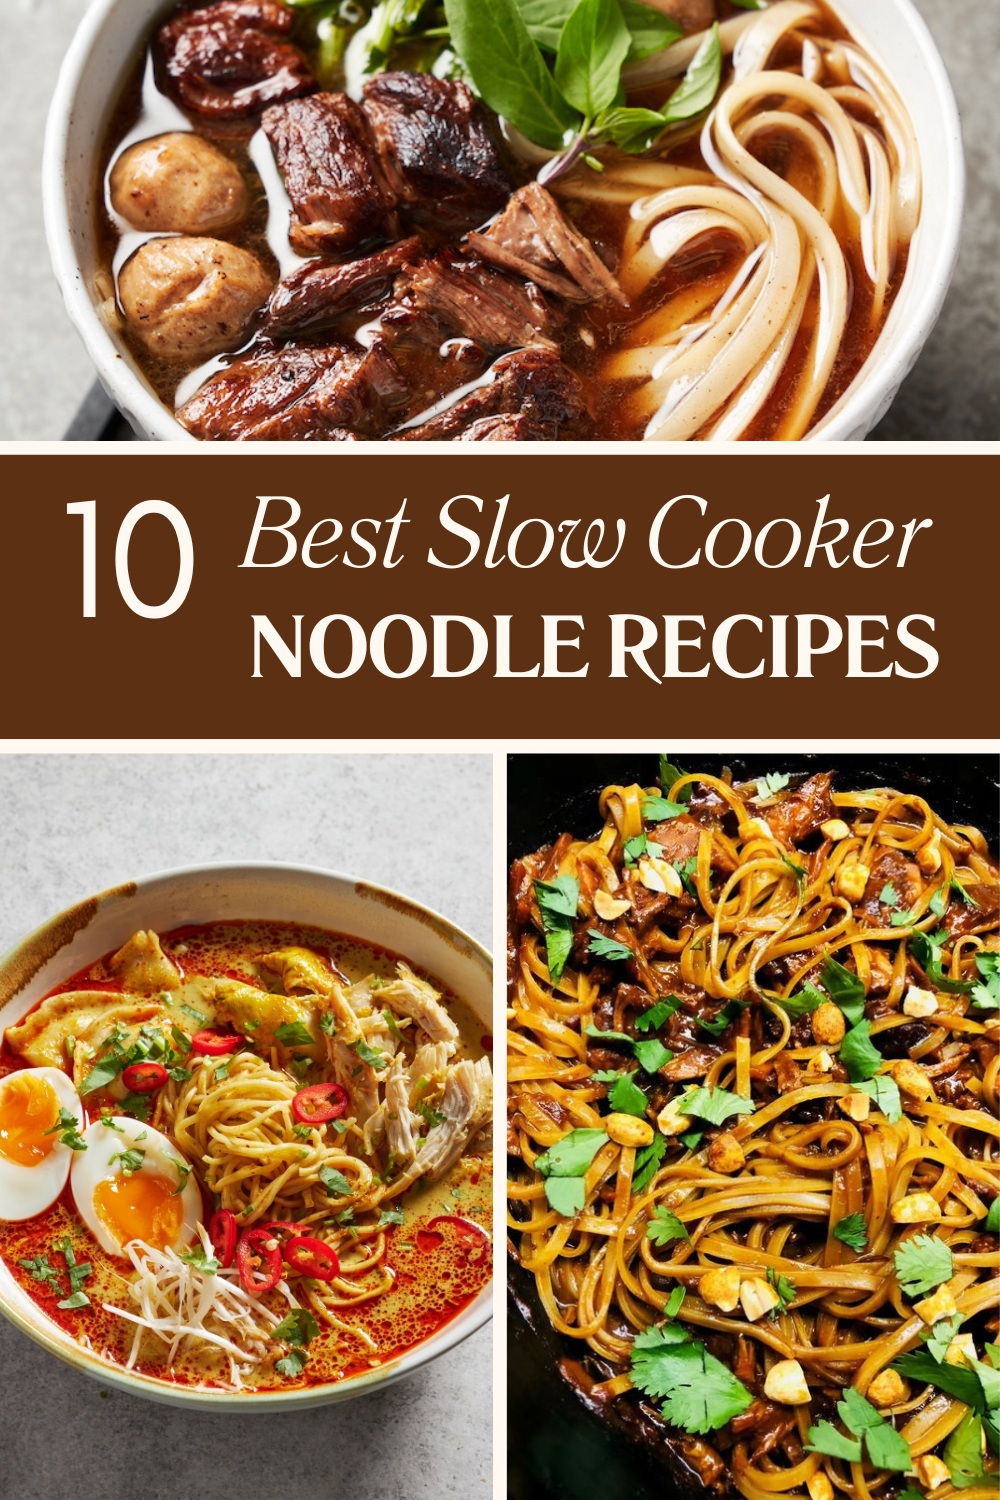 10 Best Slow Cooker Noodle Recipes